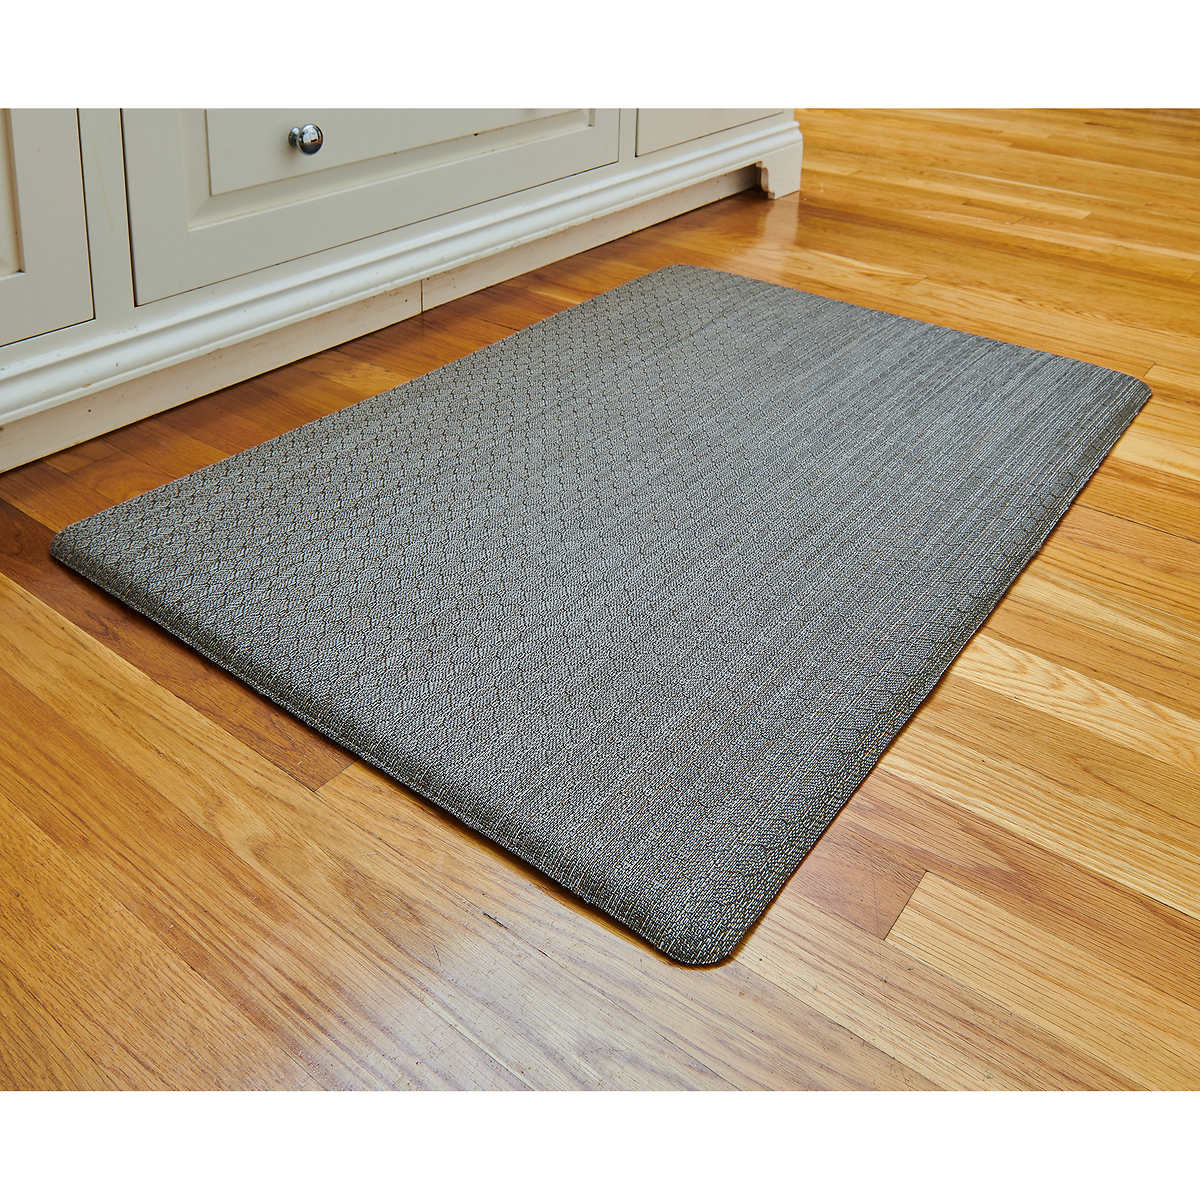 Clear Carpet Floor Protector Mat Runner Guard Home Office Plastic Sheet 27" Wide 